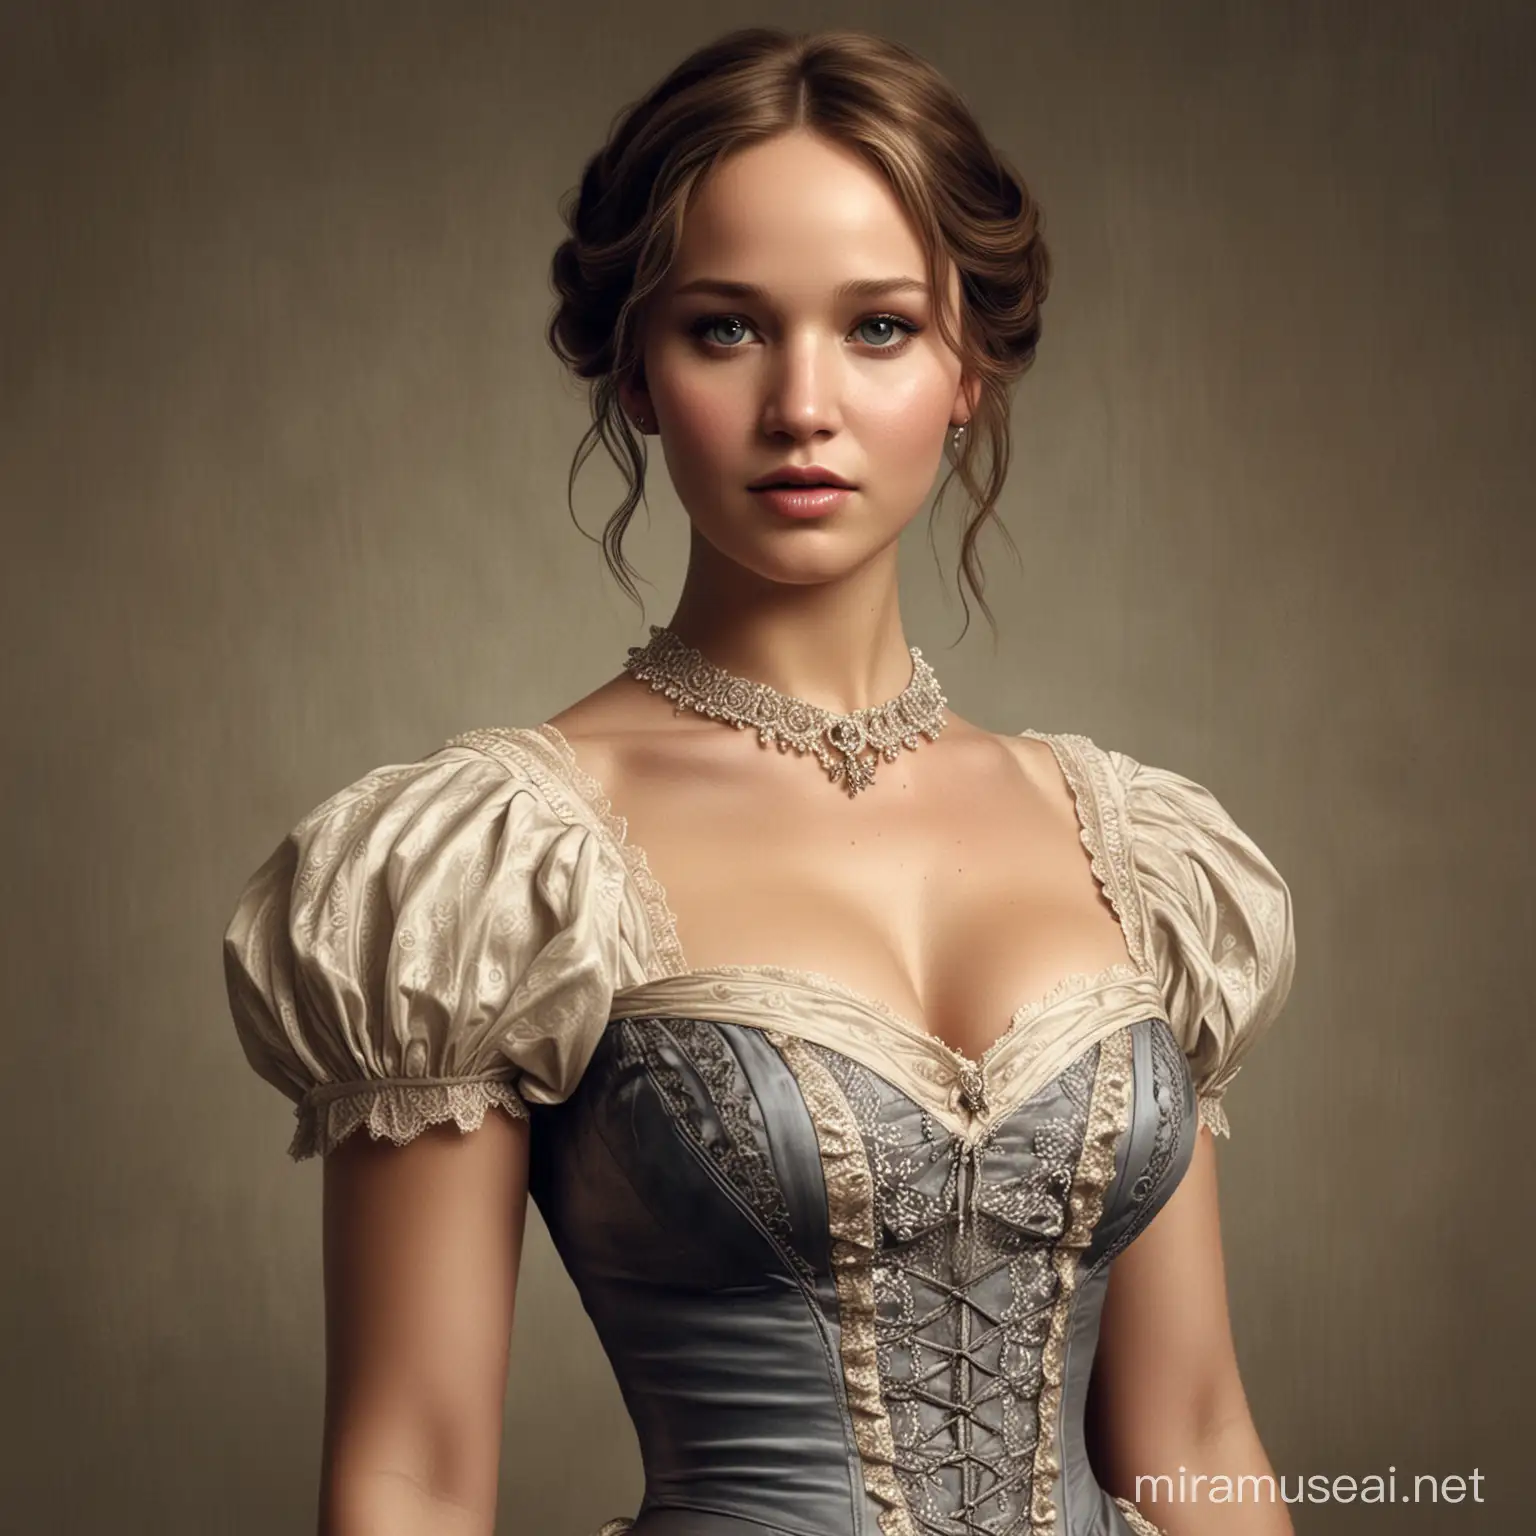 Photorealistic Portrait of Jennifer Lawrence in a Seductive Victorian Era Dress